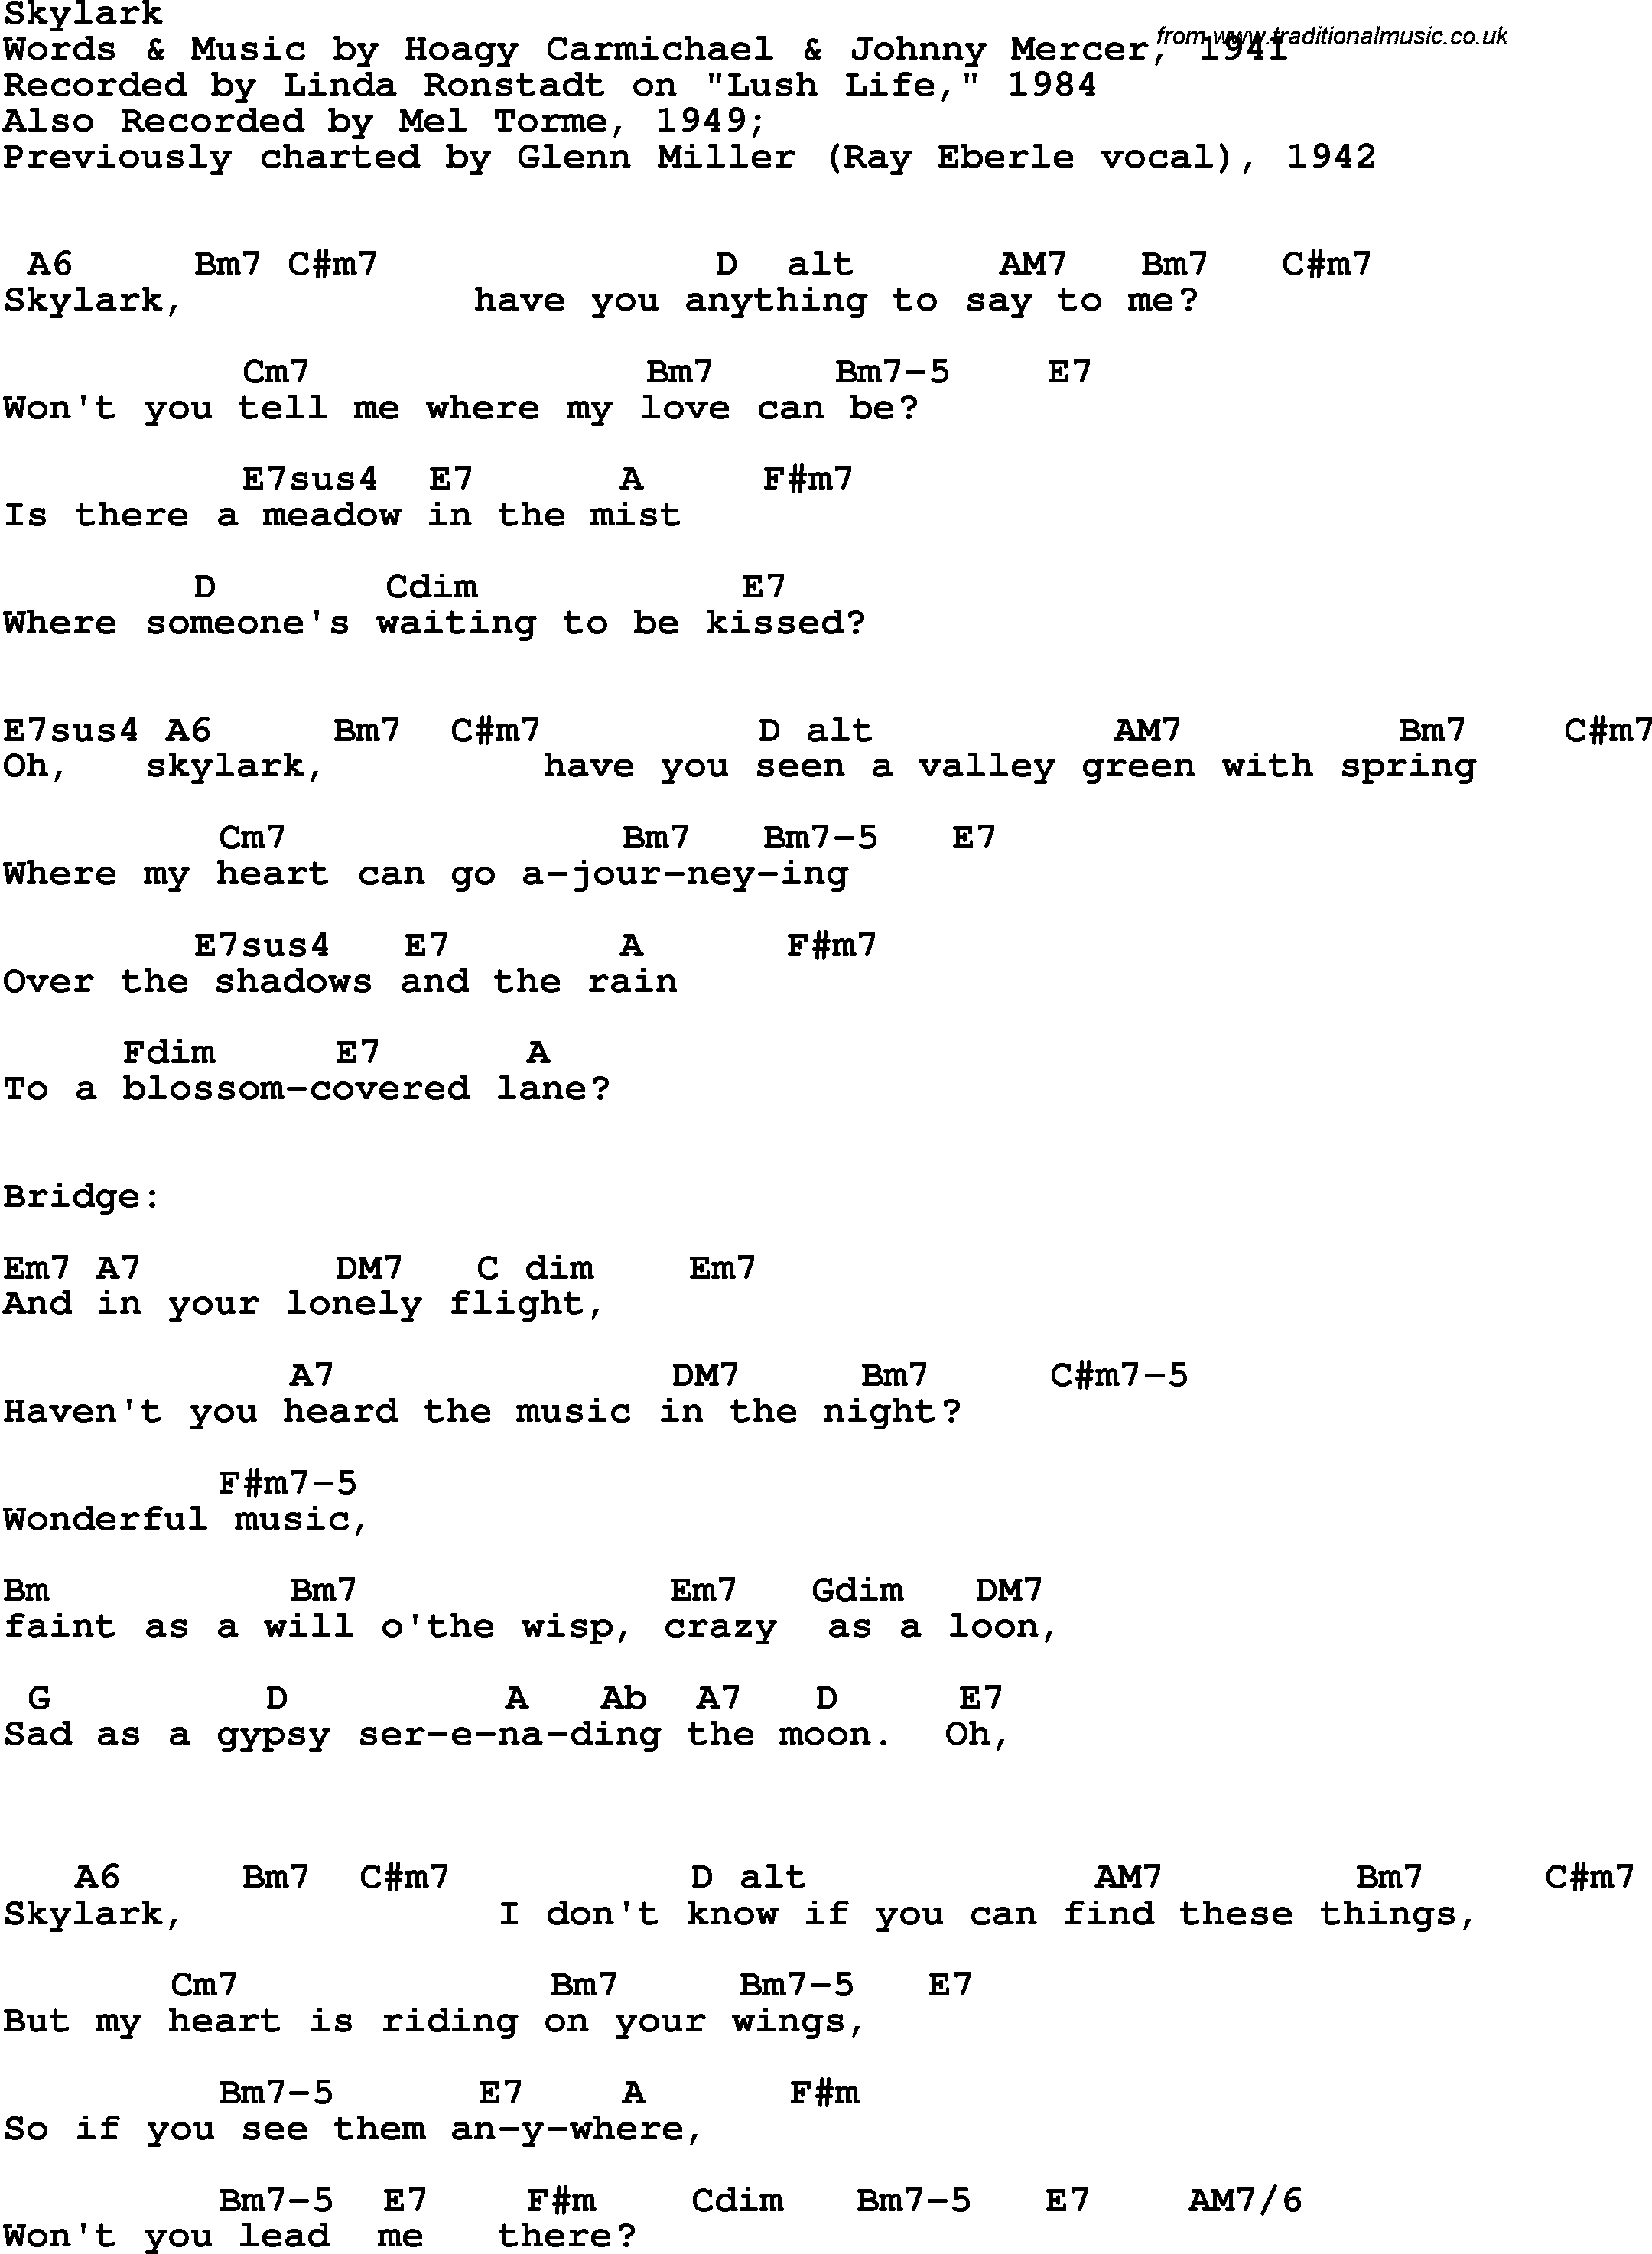 Song Lyrics with guitar chords for Skylark - Linda Ronstadt, 1984